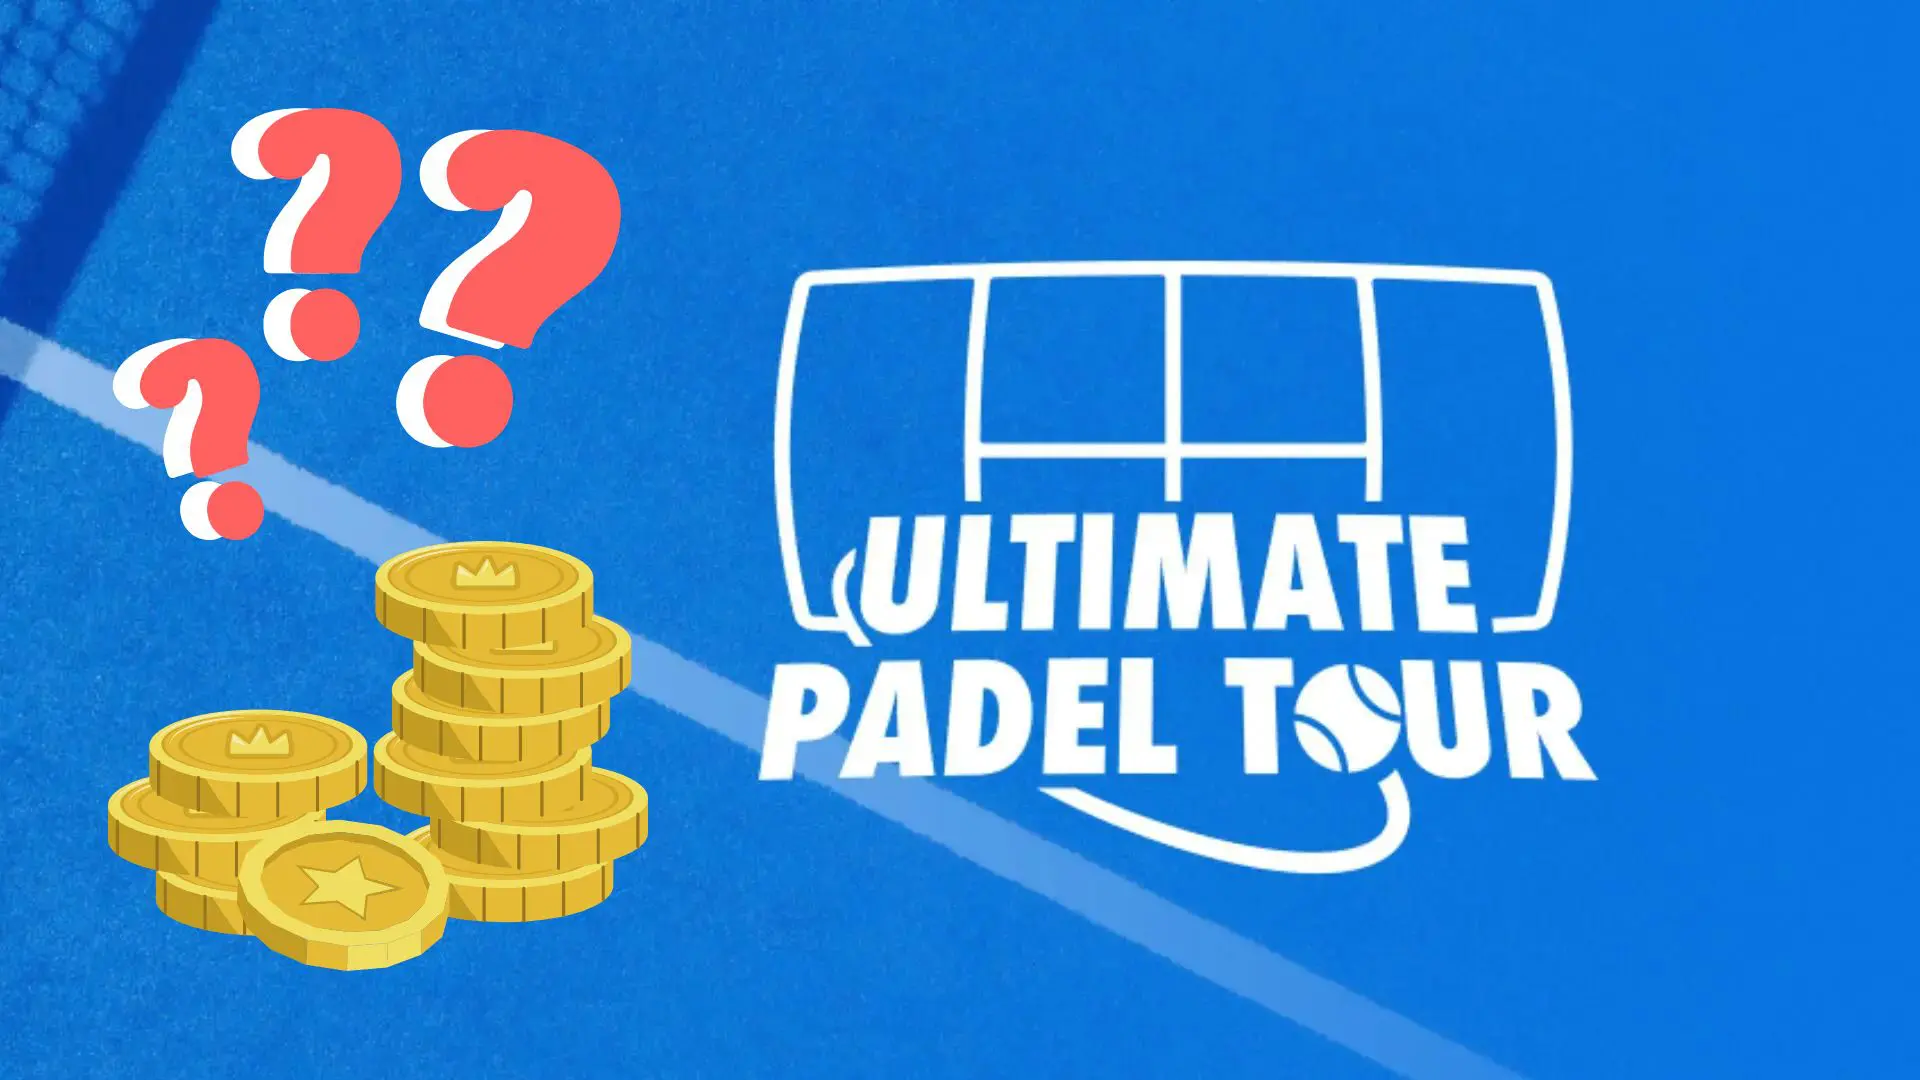 Premio in denaro definitivo Padel Tour